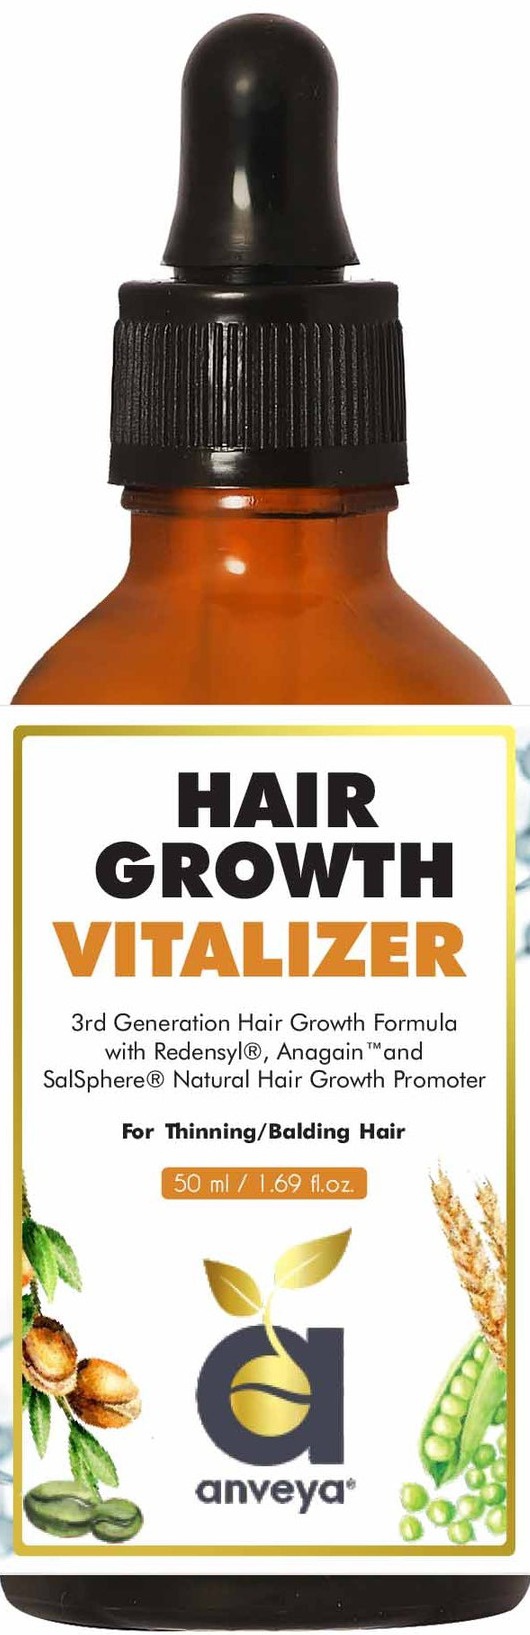 Anveya Hairgrowth Vitalizer Serum